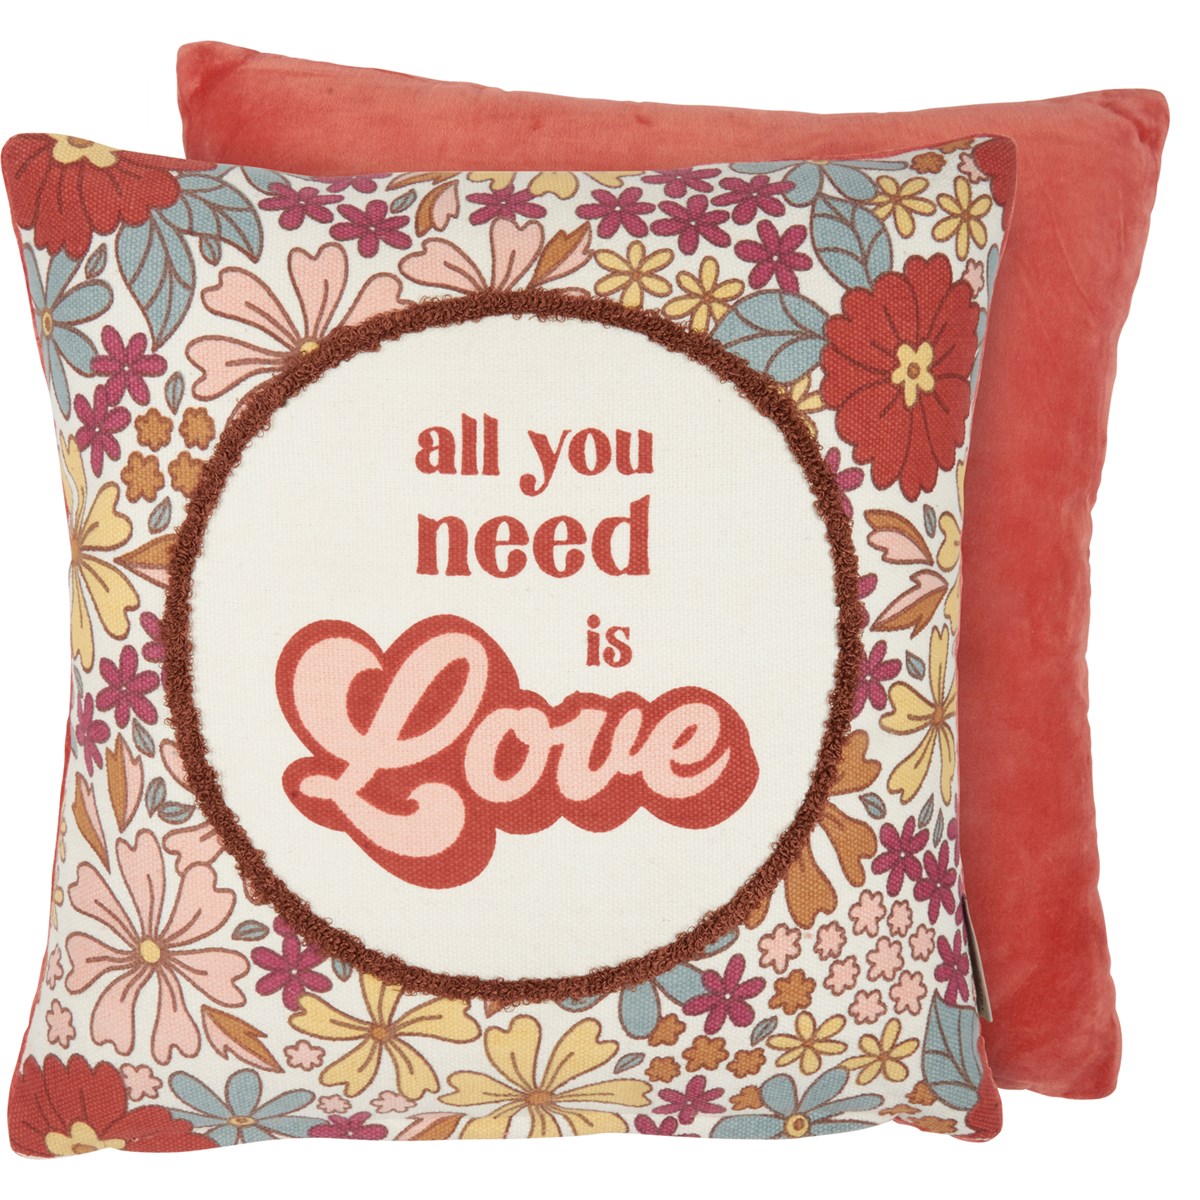 All You Need Is Love Pillow - Cotton, Velvet, Zipper